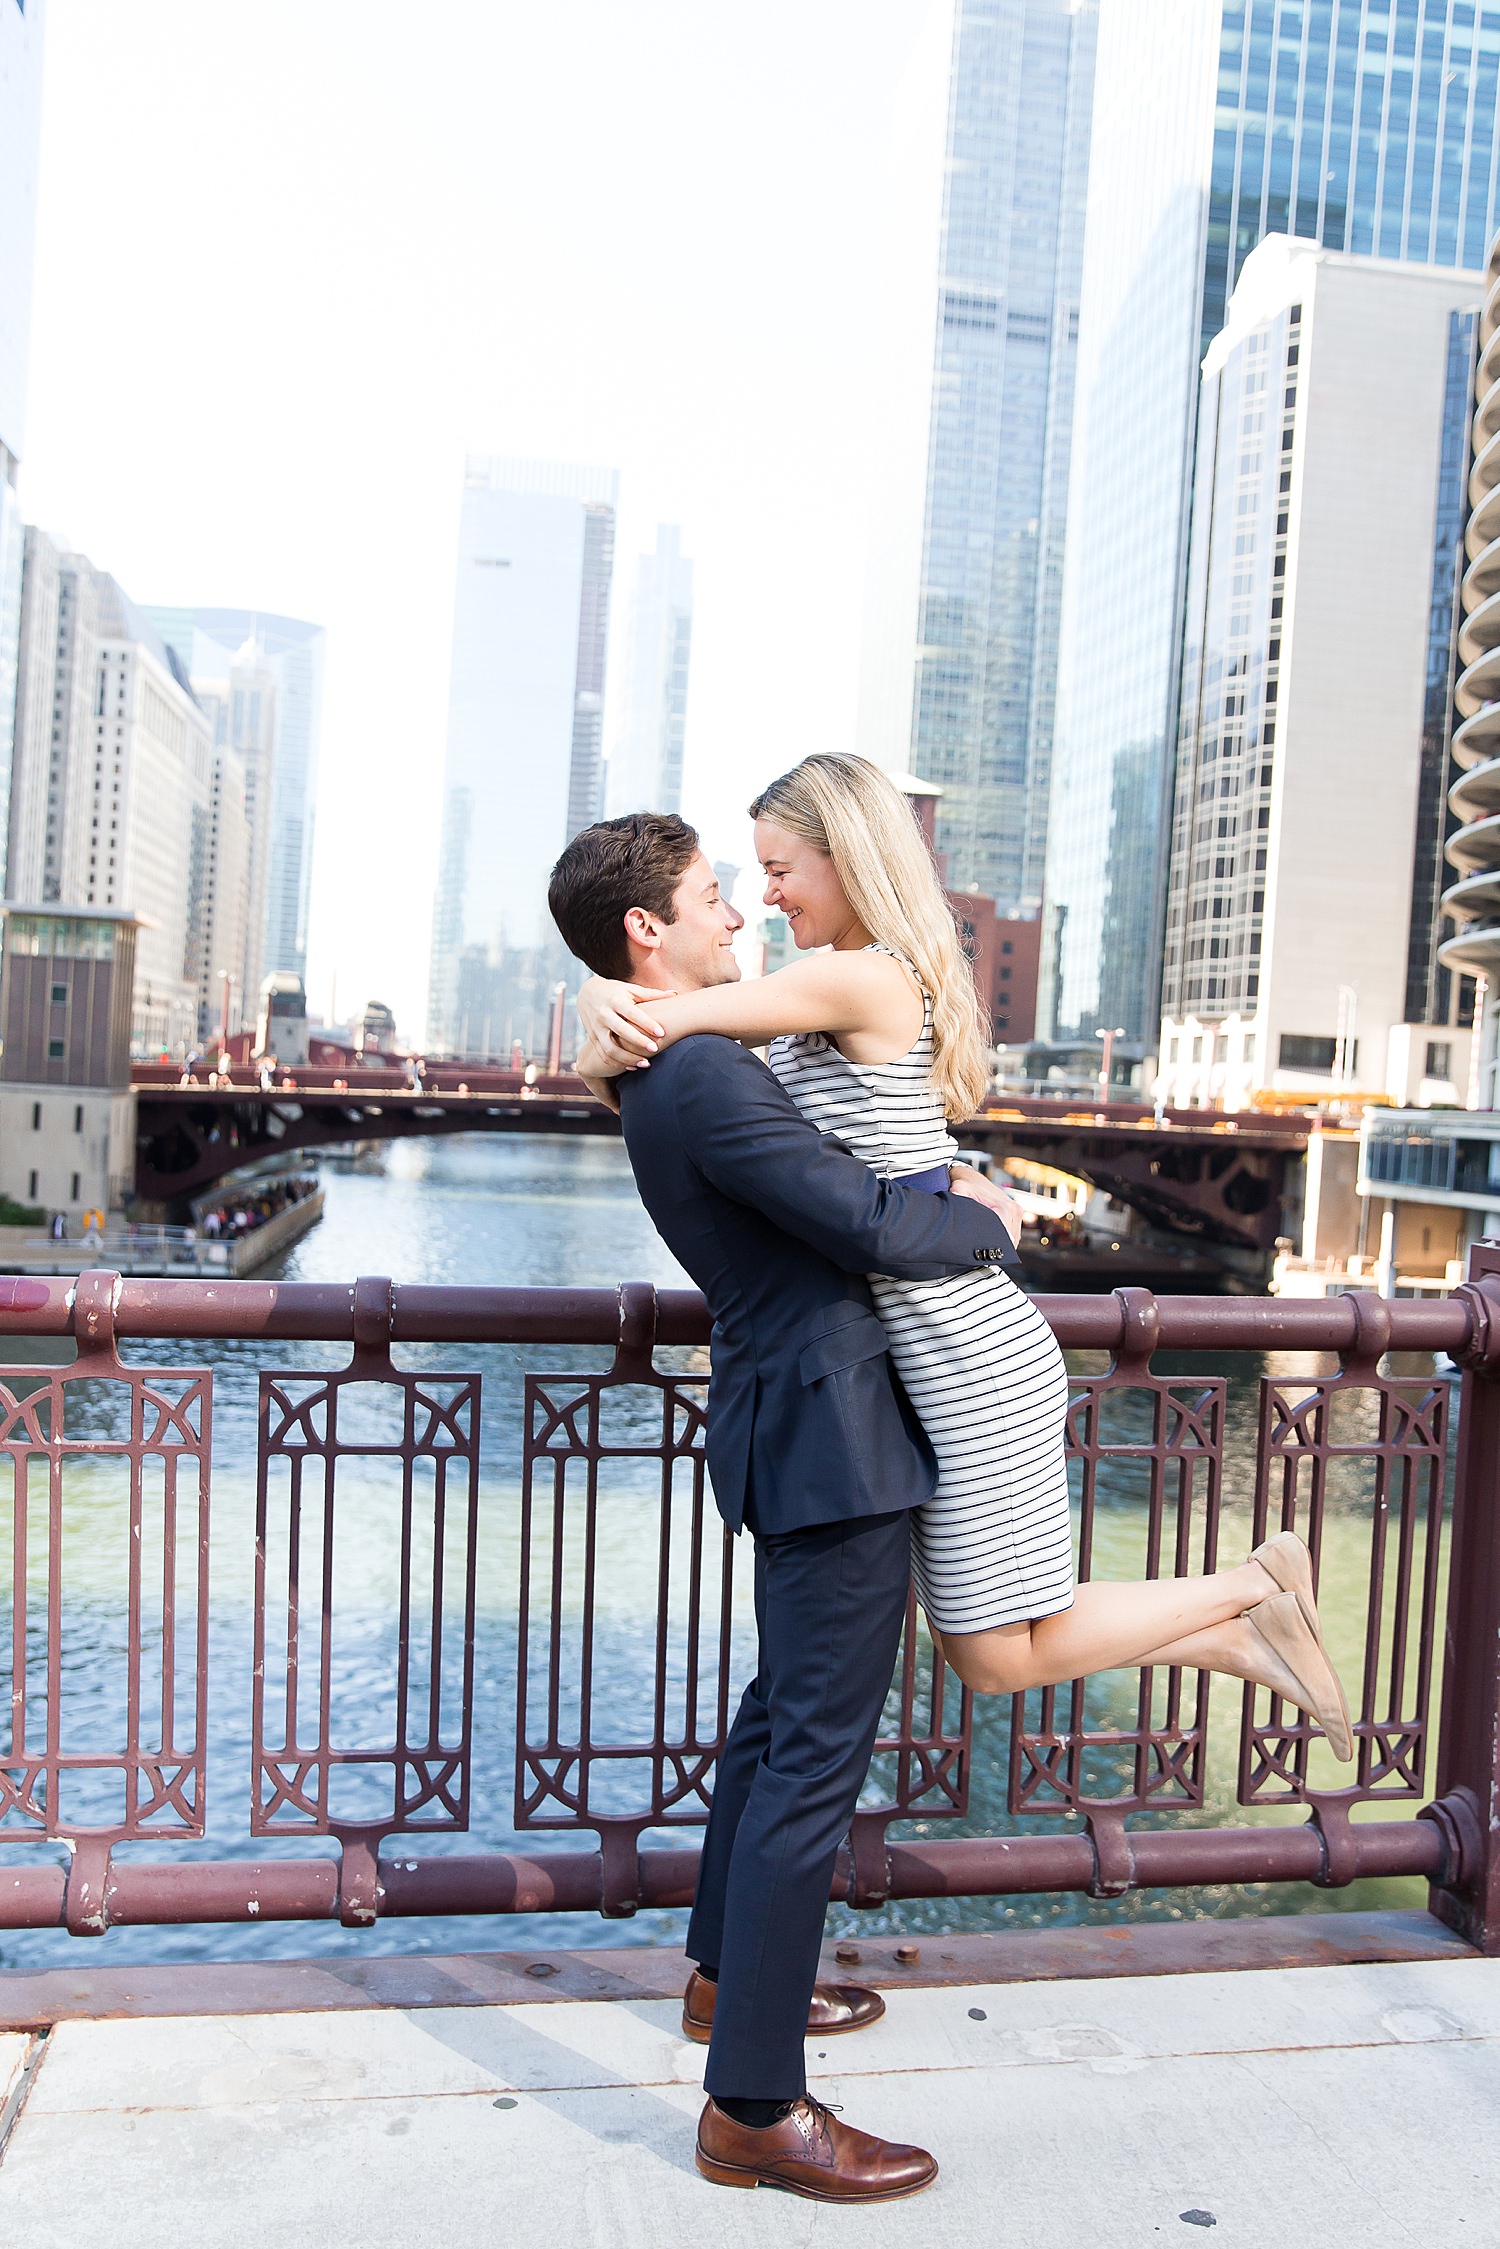 Evan picks up Julia on bridge in Chicago.